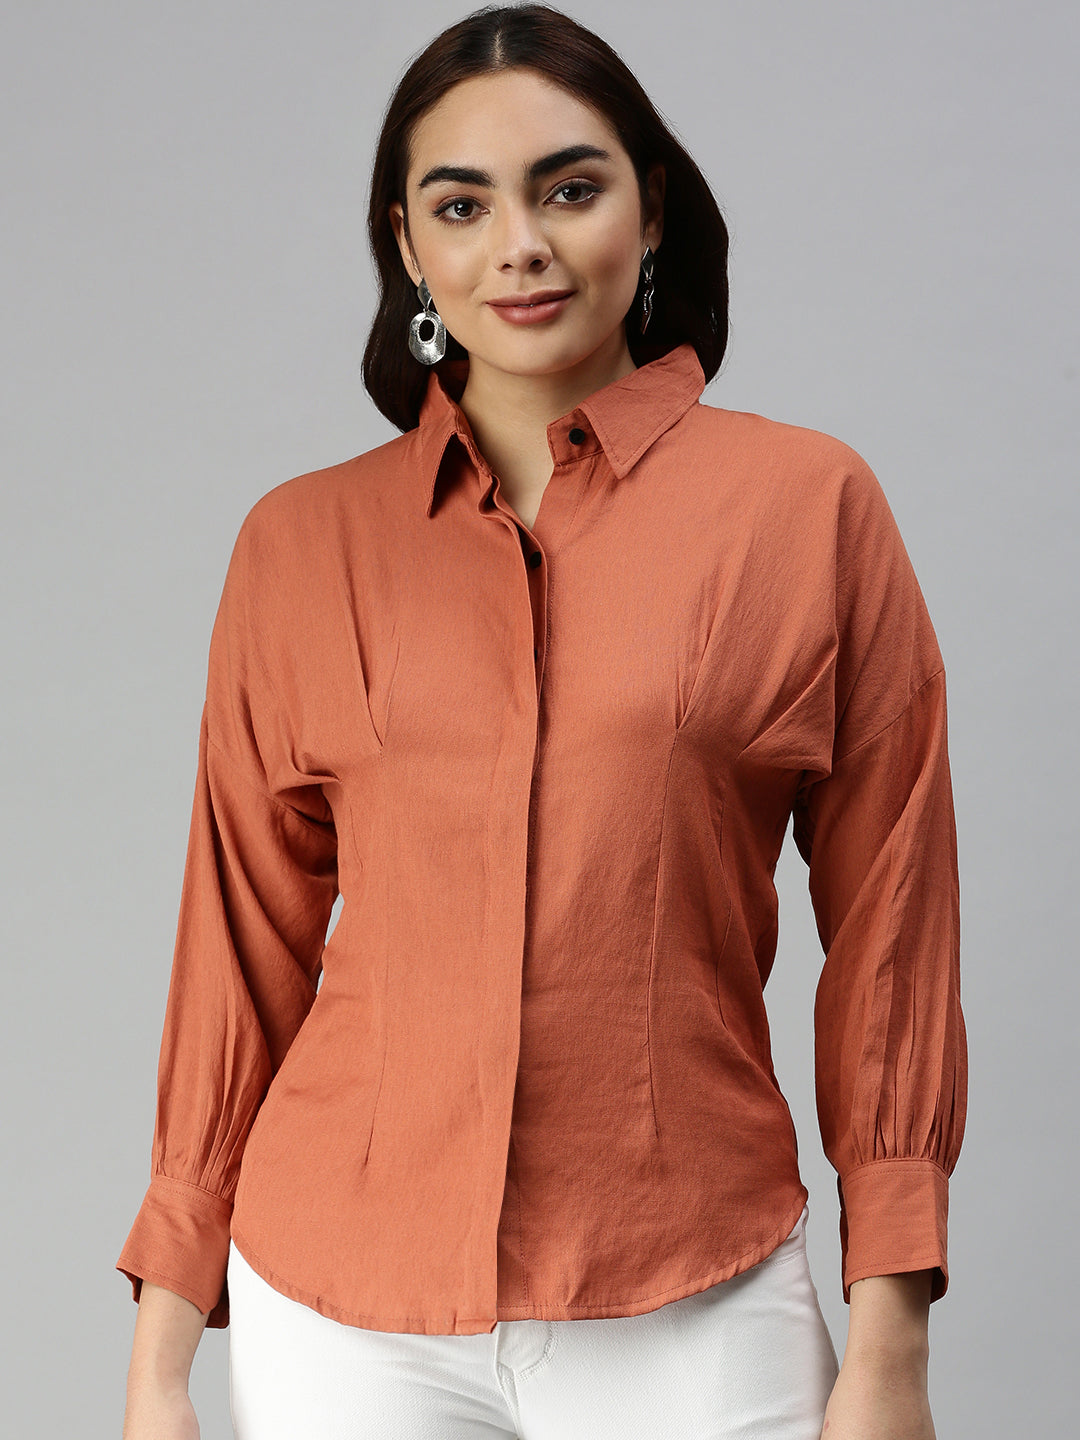 Women's Rust Solid Shirt